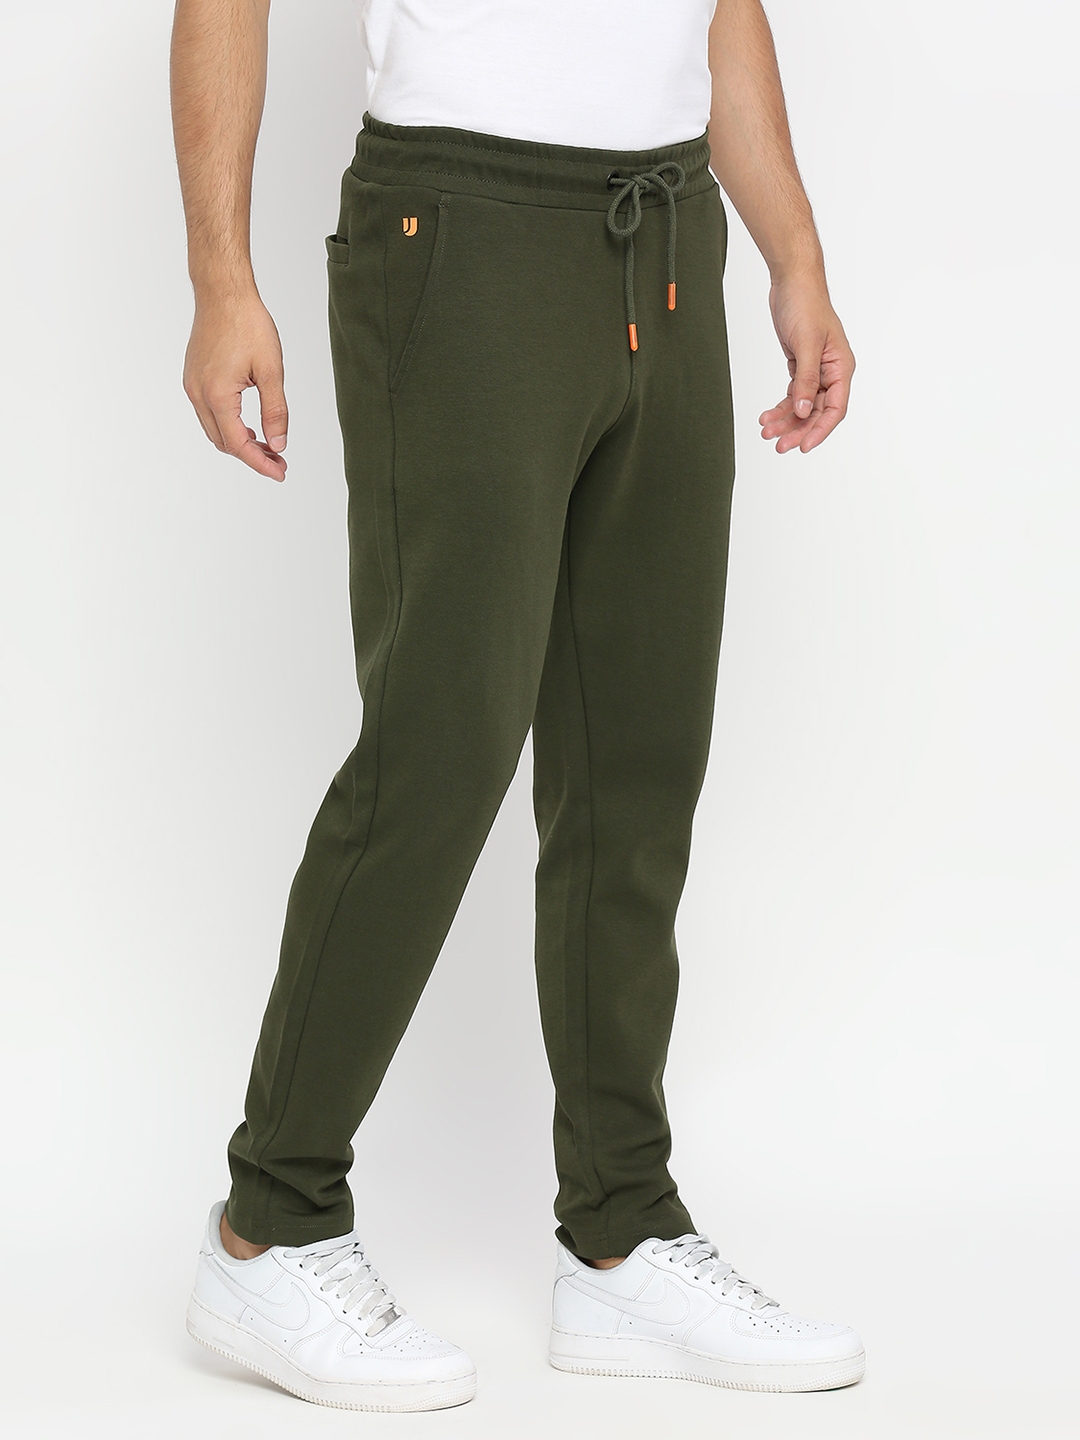 spykar | Underjeans by Spykar Men Knitted Rifle Green Cotton Pyjama 2